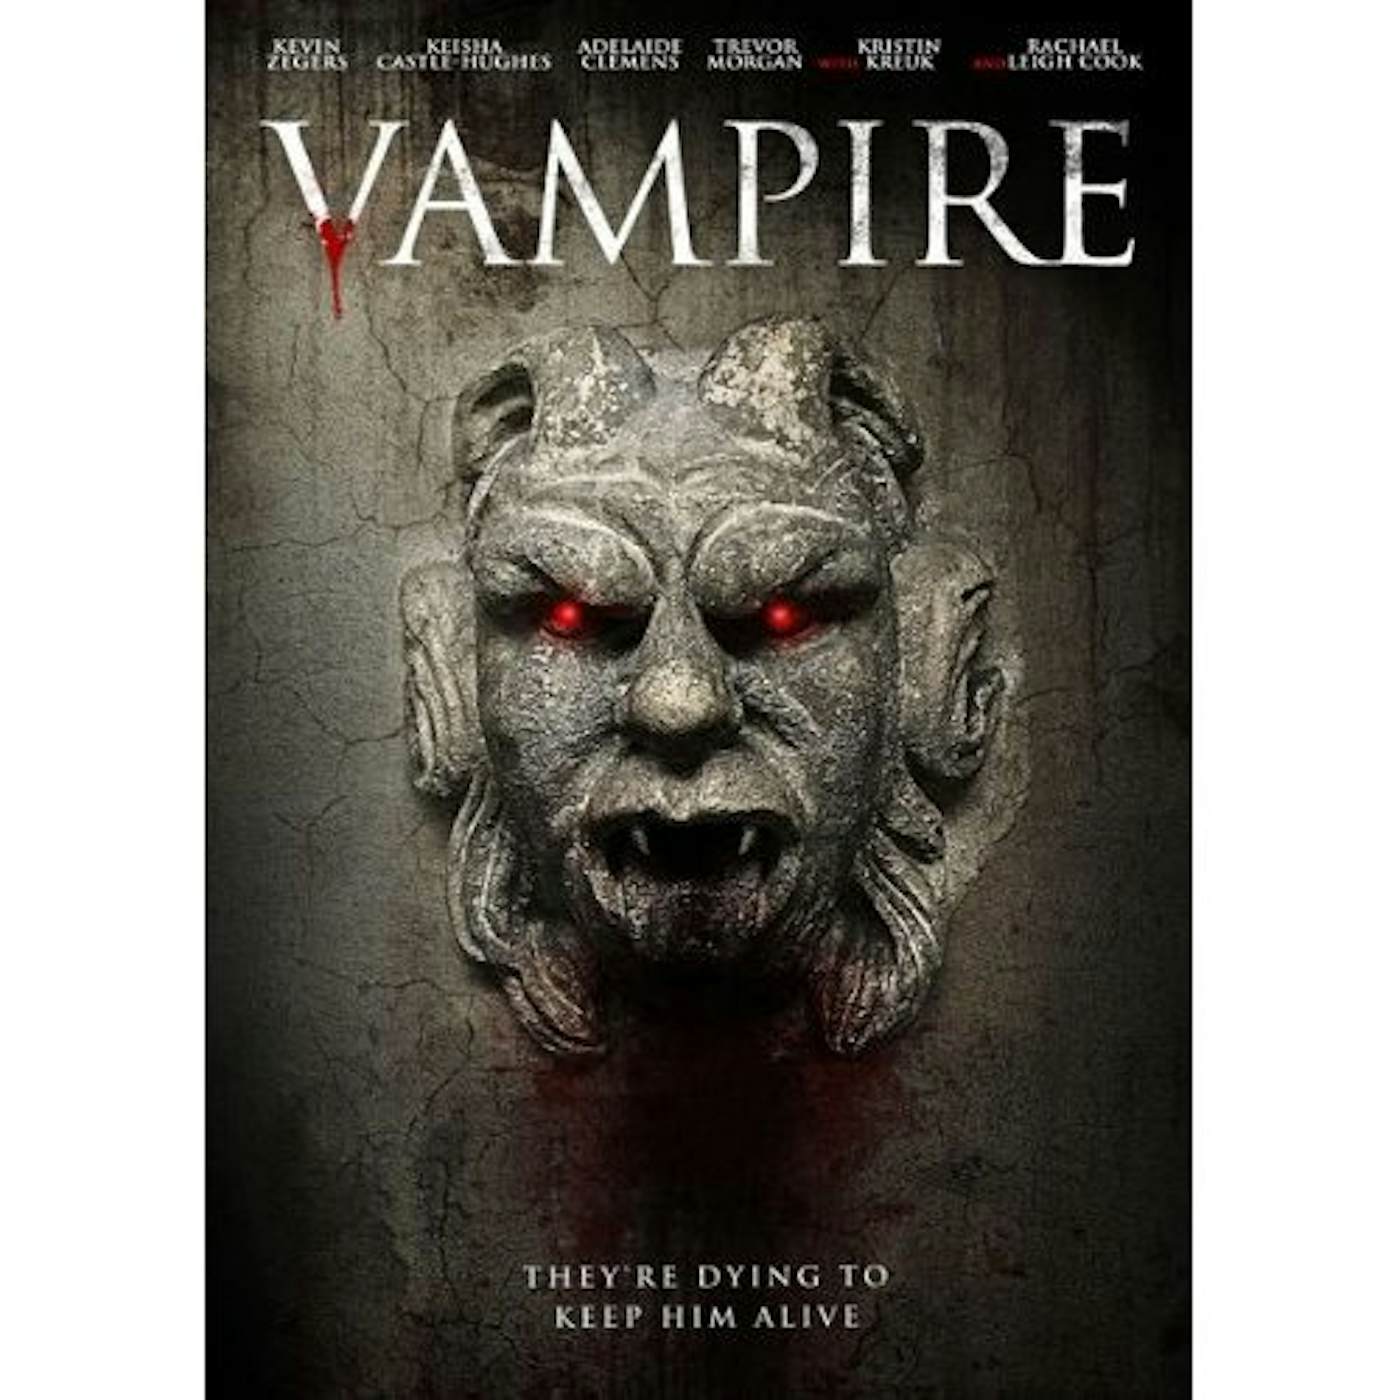 VAMPIRE DVD